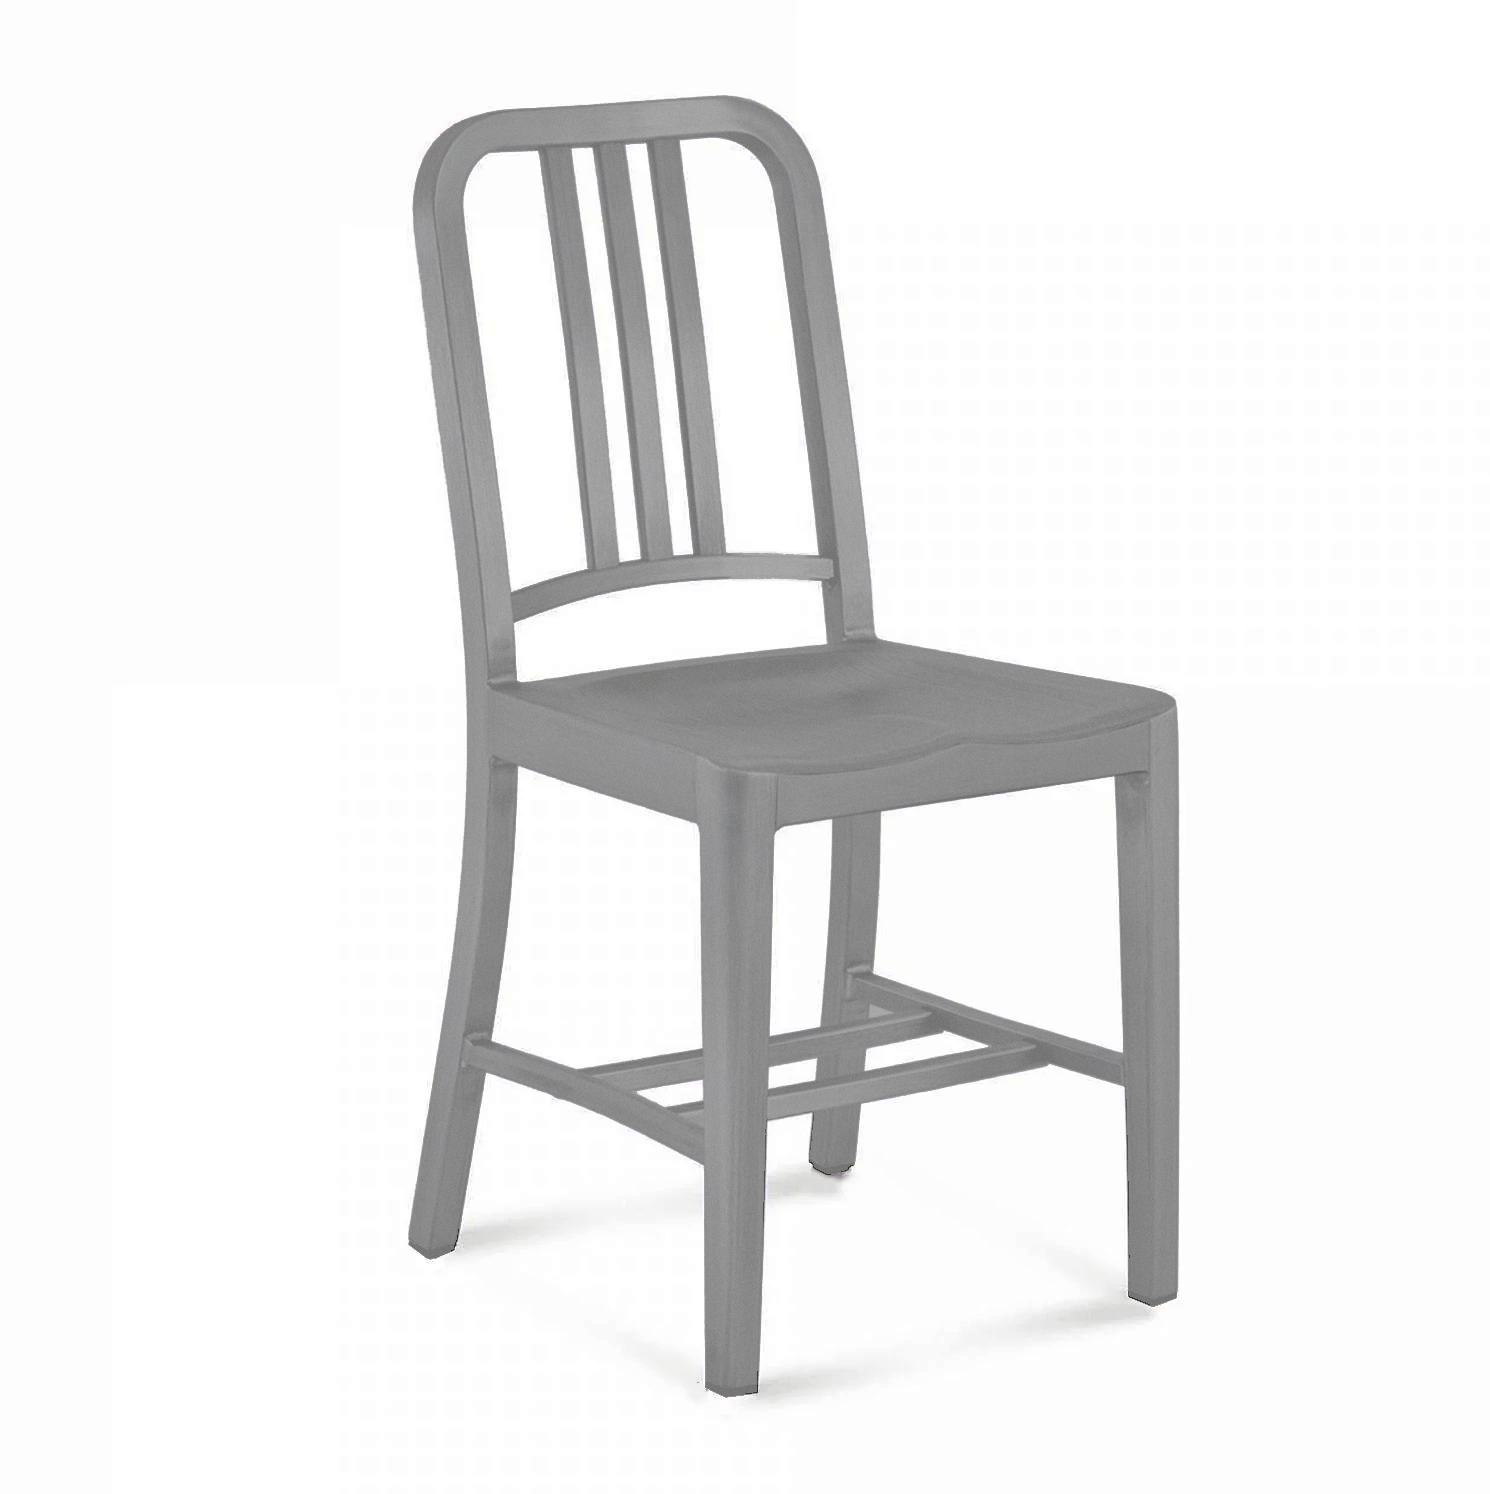 Emeco Style Navy Chair (Aluminium with Powder Coat)